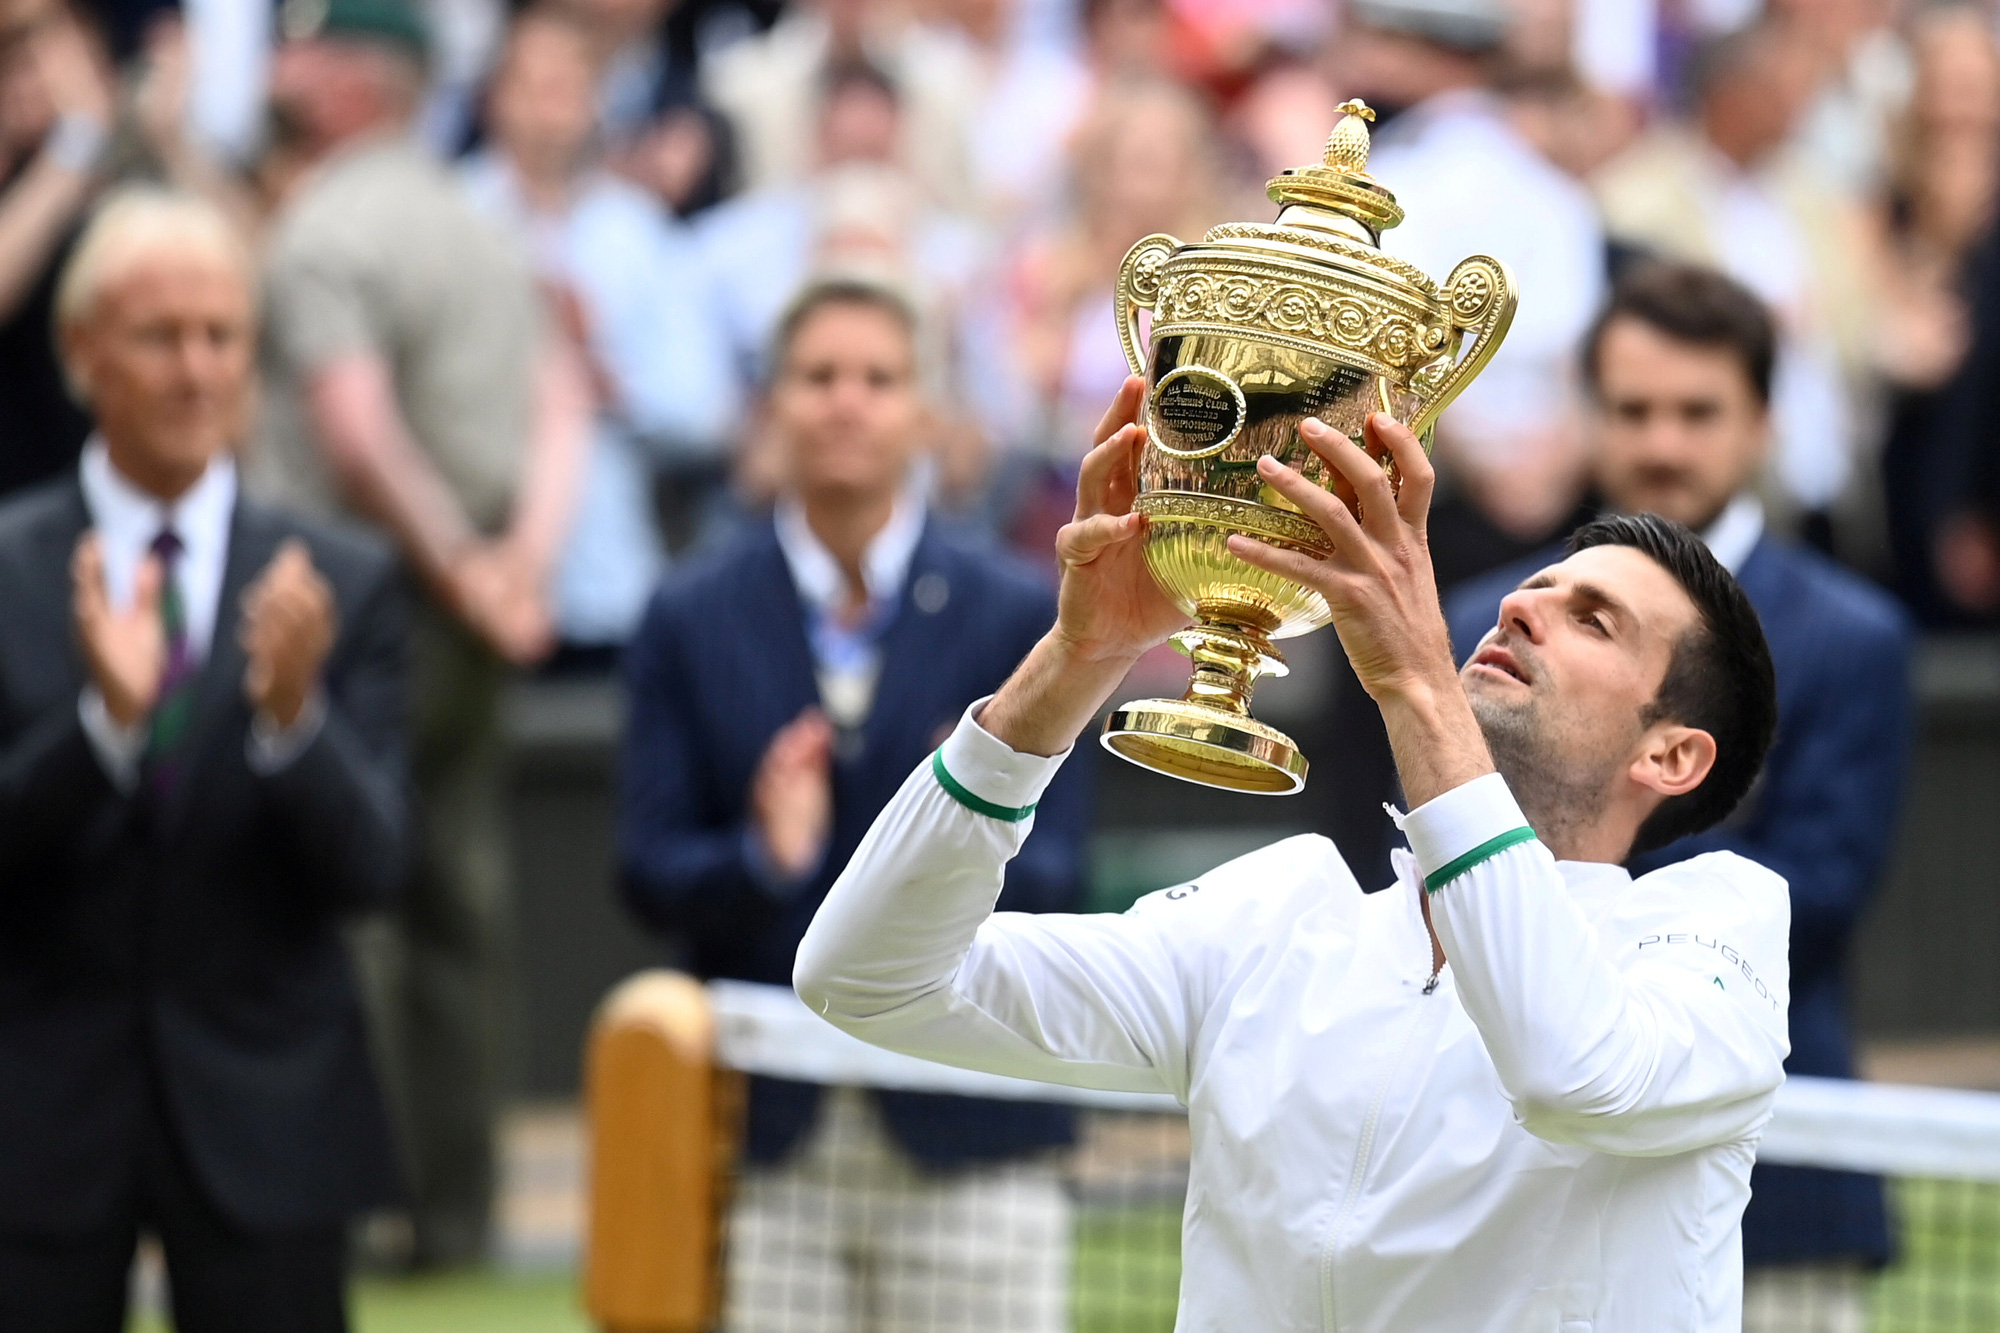 Djokovic vô địch Wimbledon 2021, san bằng kỷ lục 20 Grand Slam - Ảnh 11.